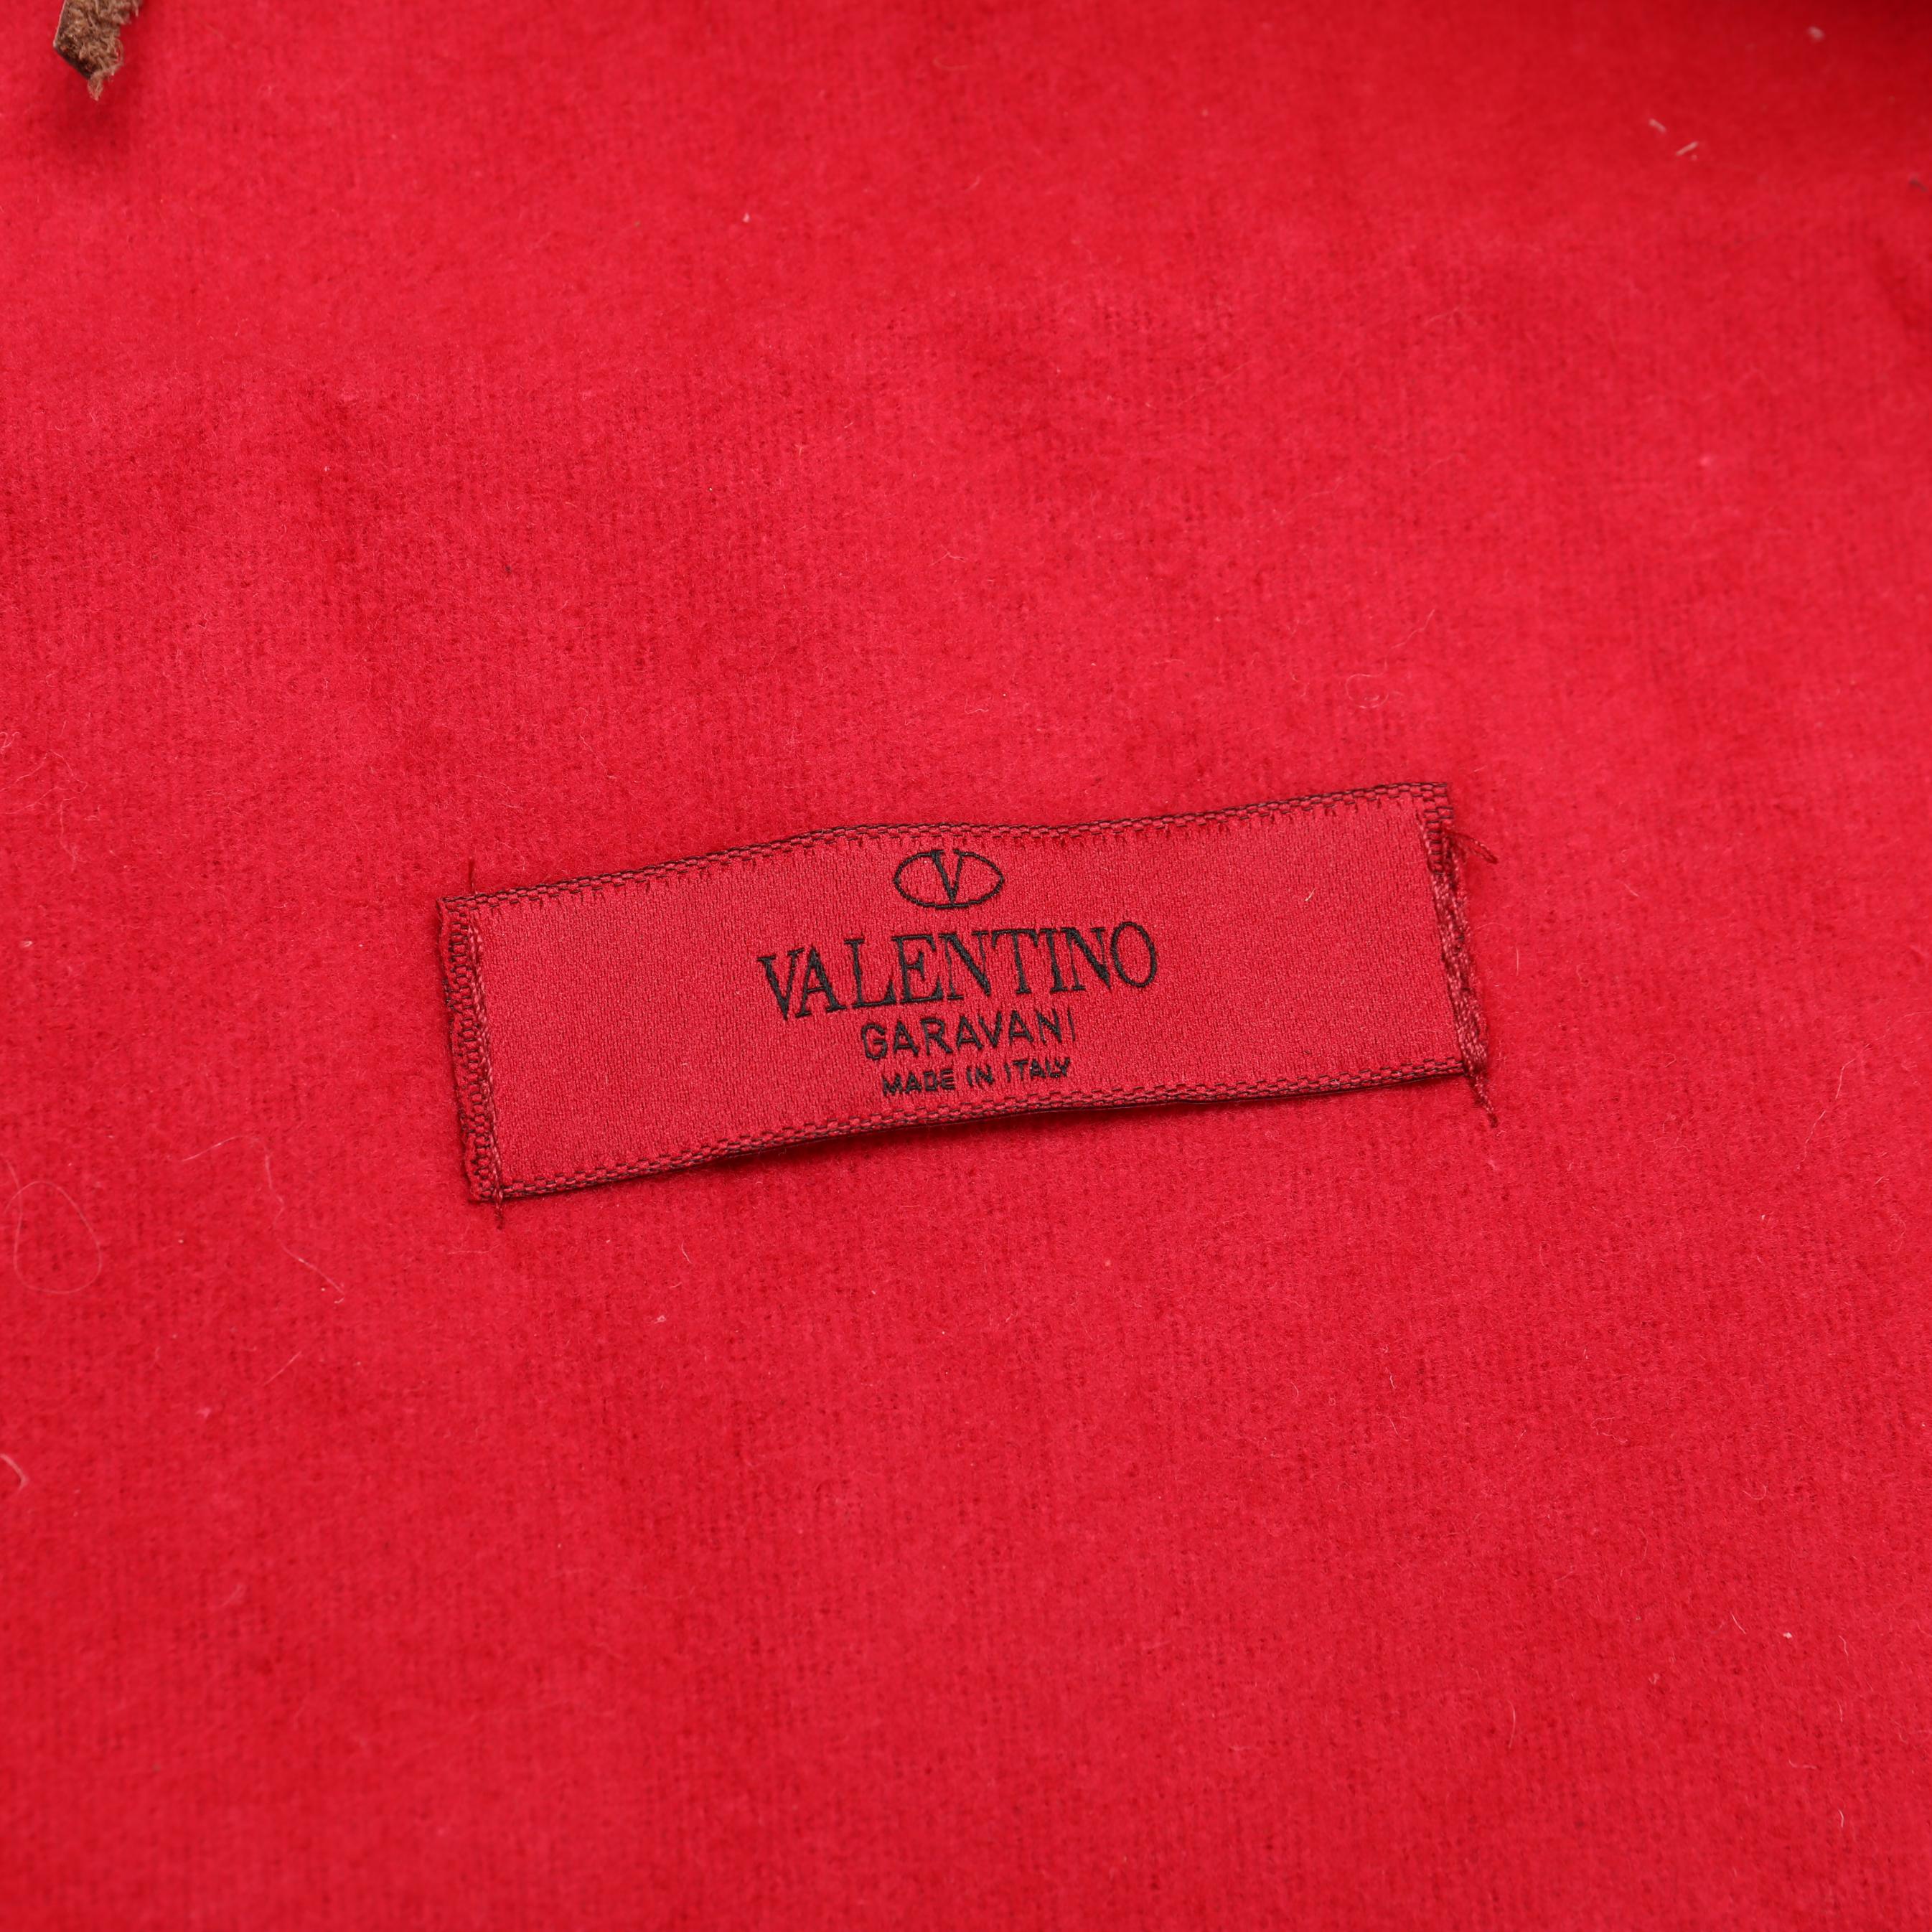 Metallic Gold Crossbody Bag, Mario Valentino Spa (Lot 1025